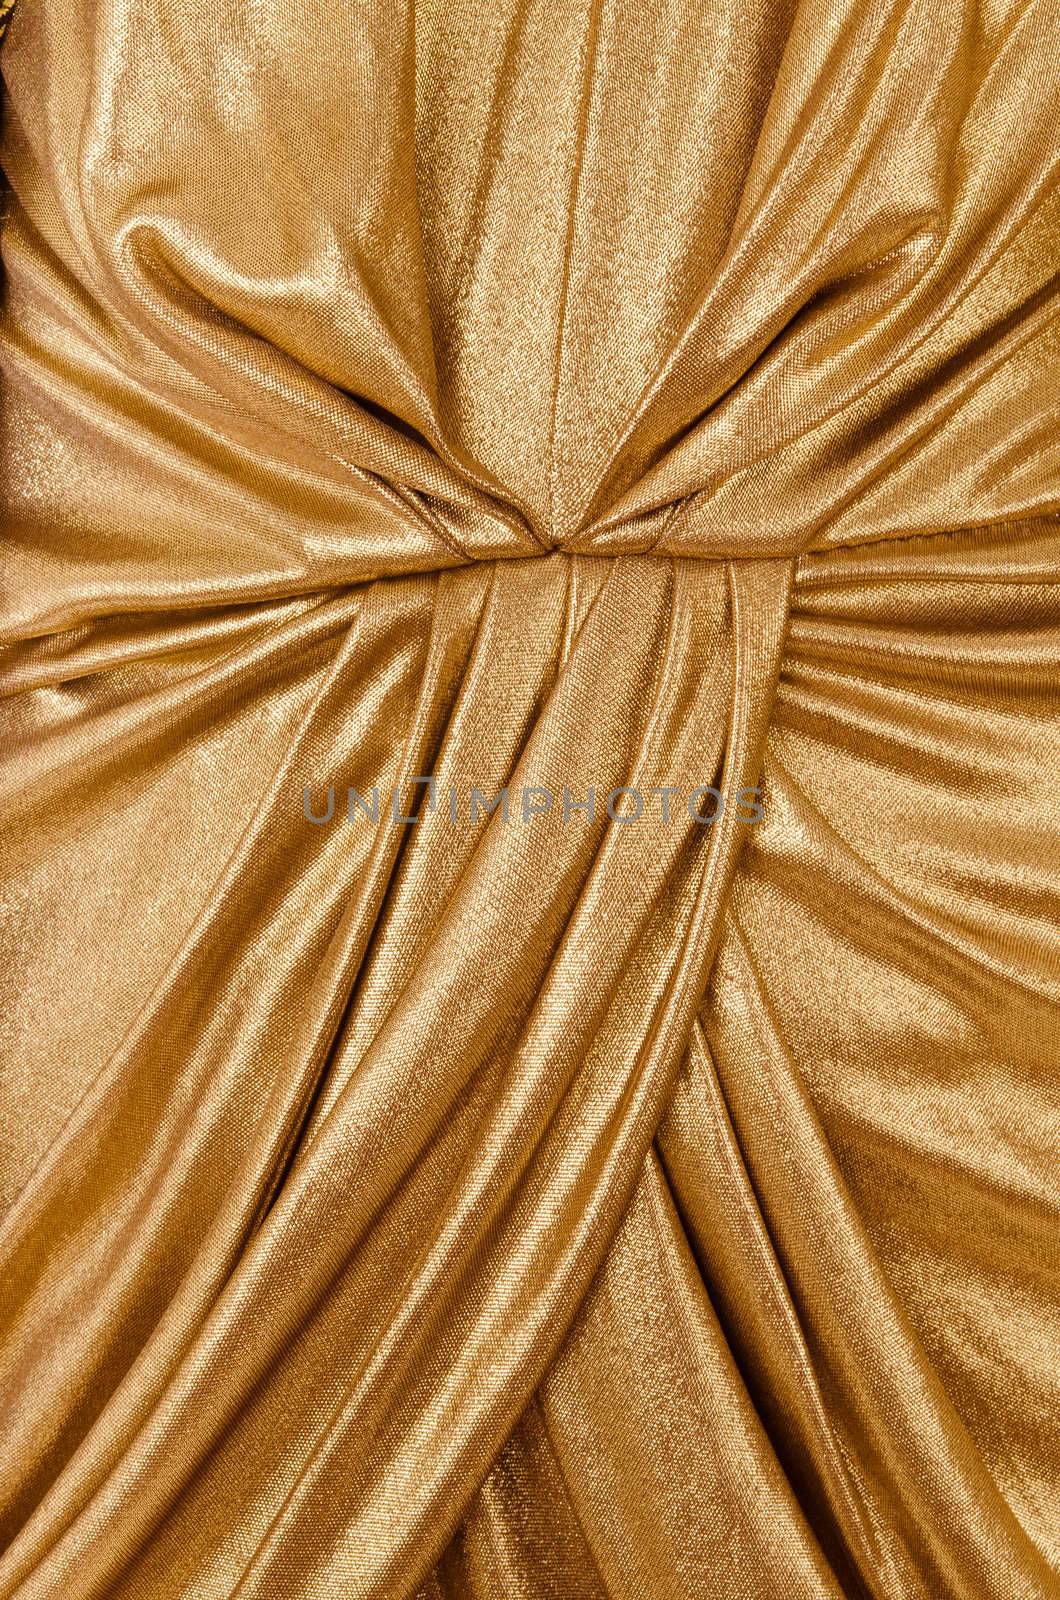 folds gold fabric closeup by Sergieiev